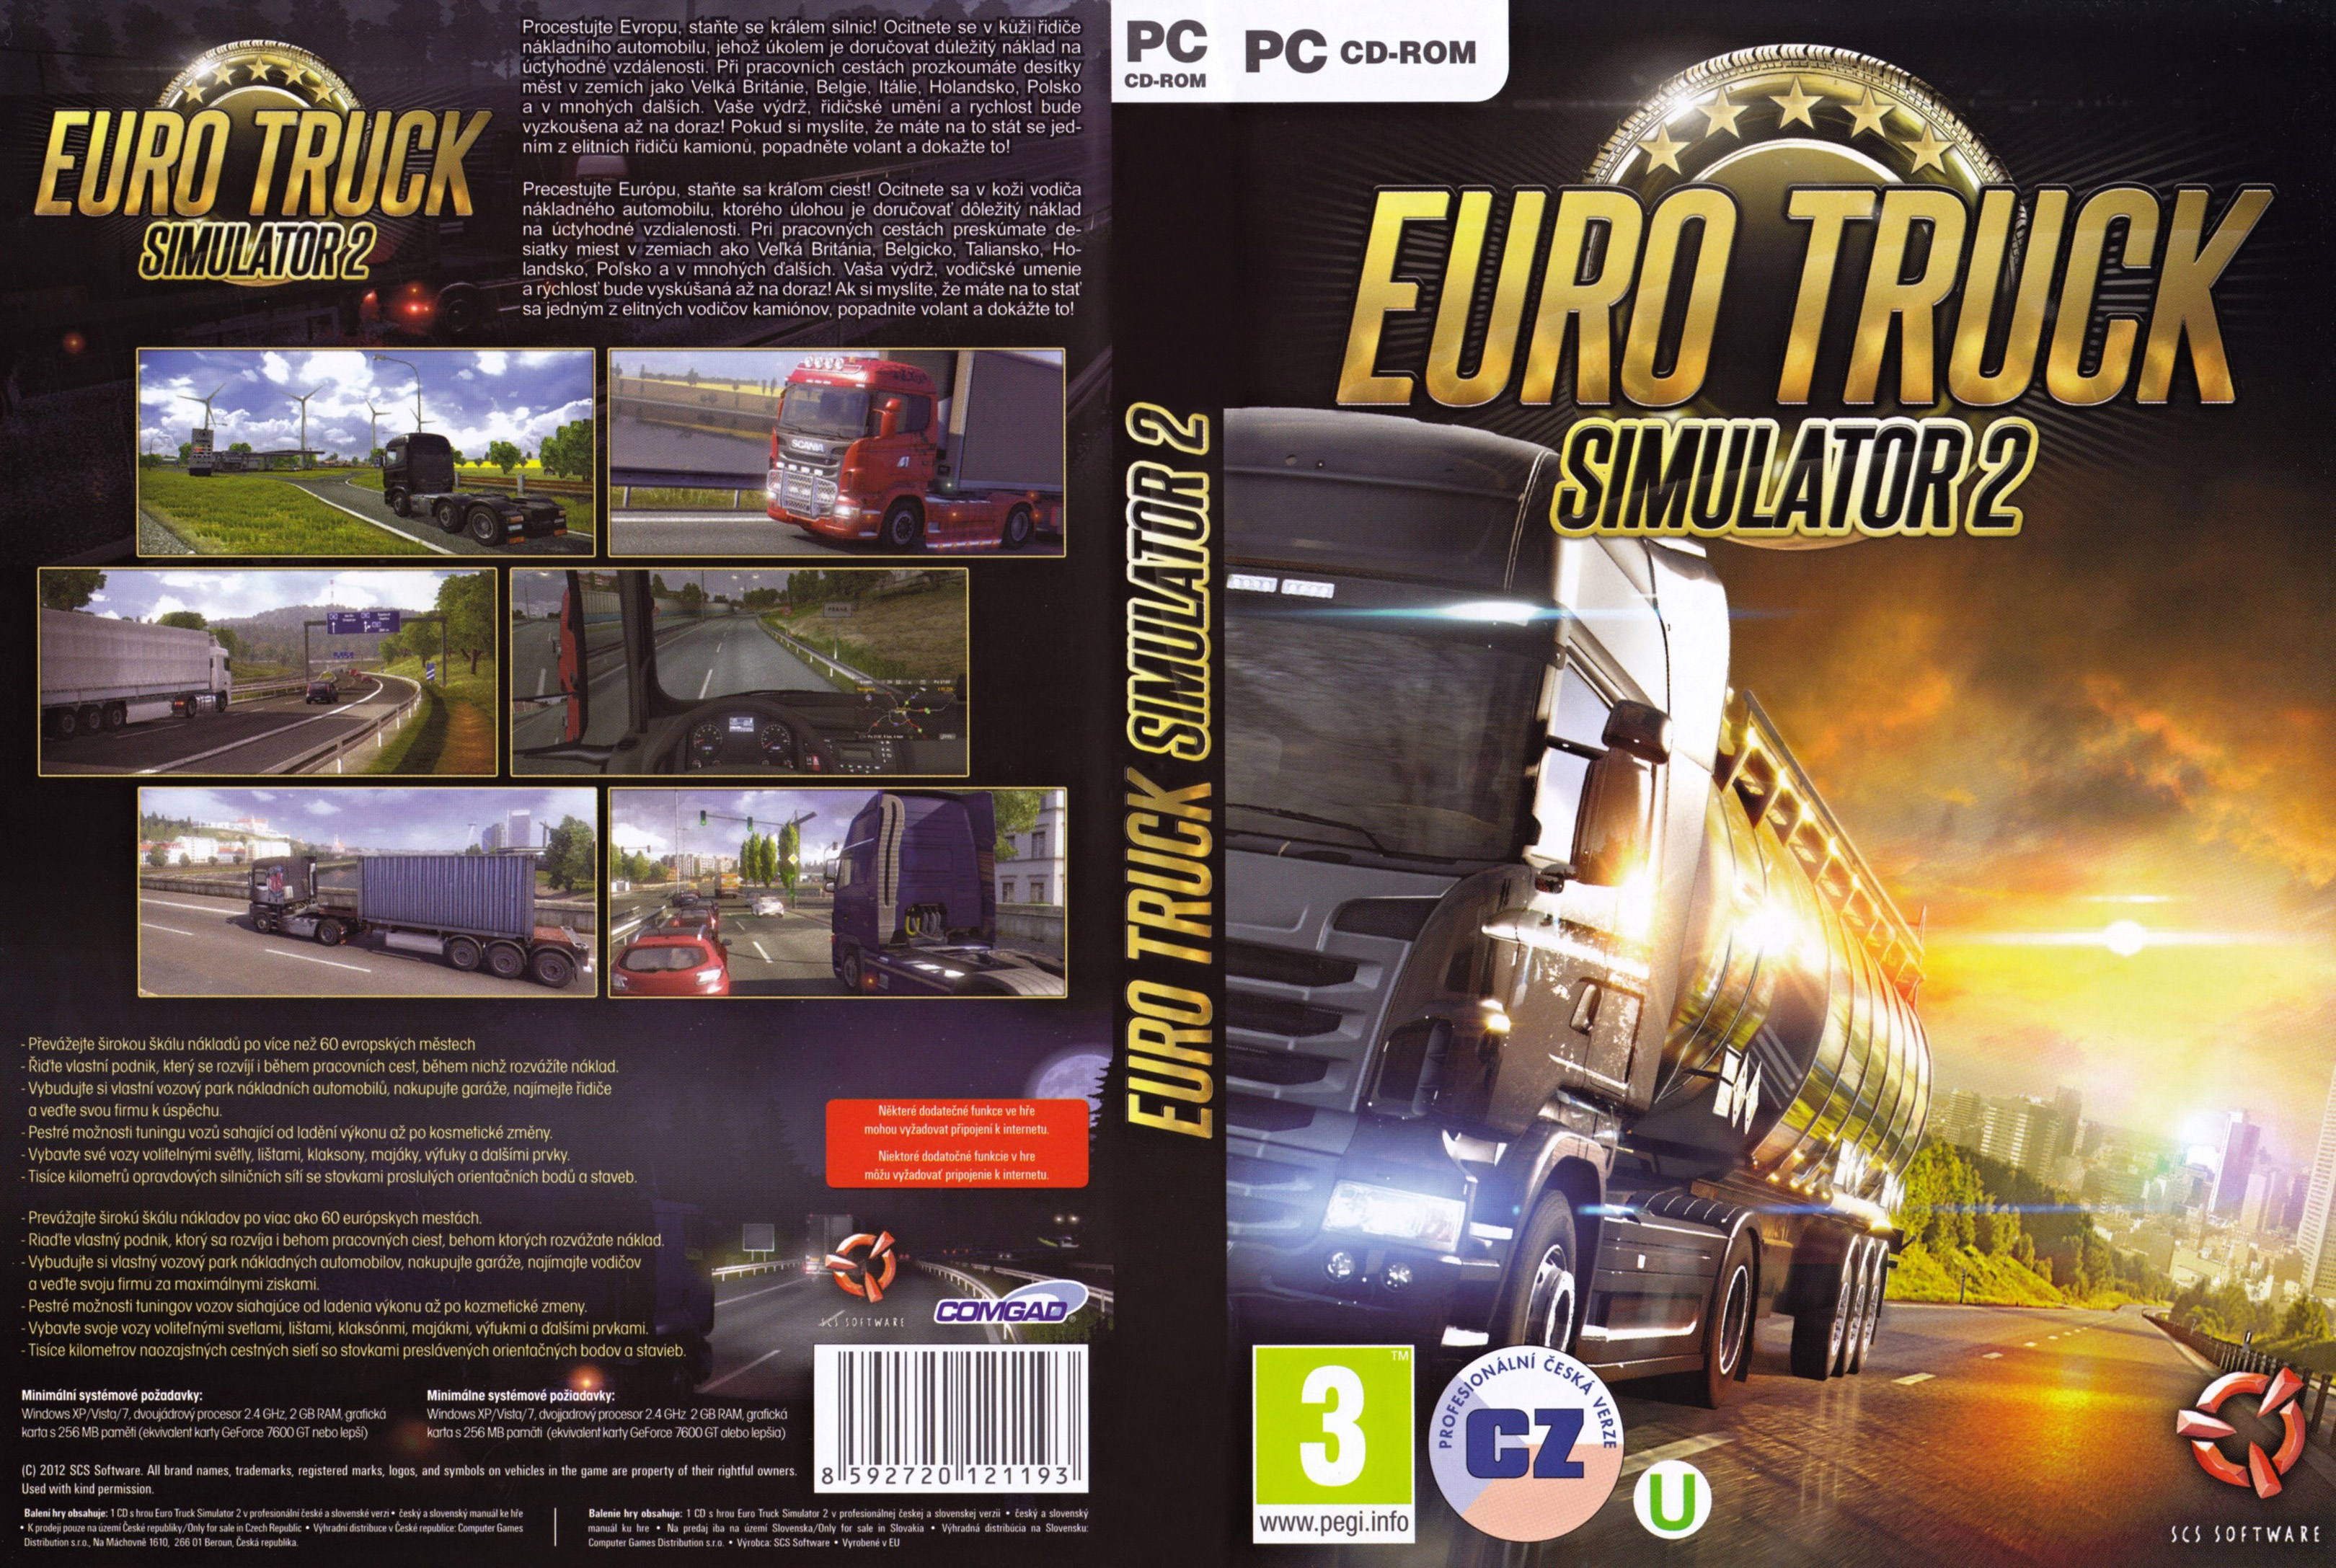 Eurotrack. Euro Truck Simulator 2 обложка диска. Евро Truck Simulator 2 диск. Euro Truck Simulator 3 диск. Евро трек симулятор 2 двд диск.